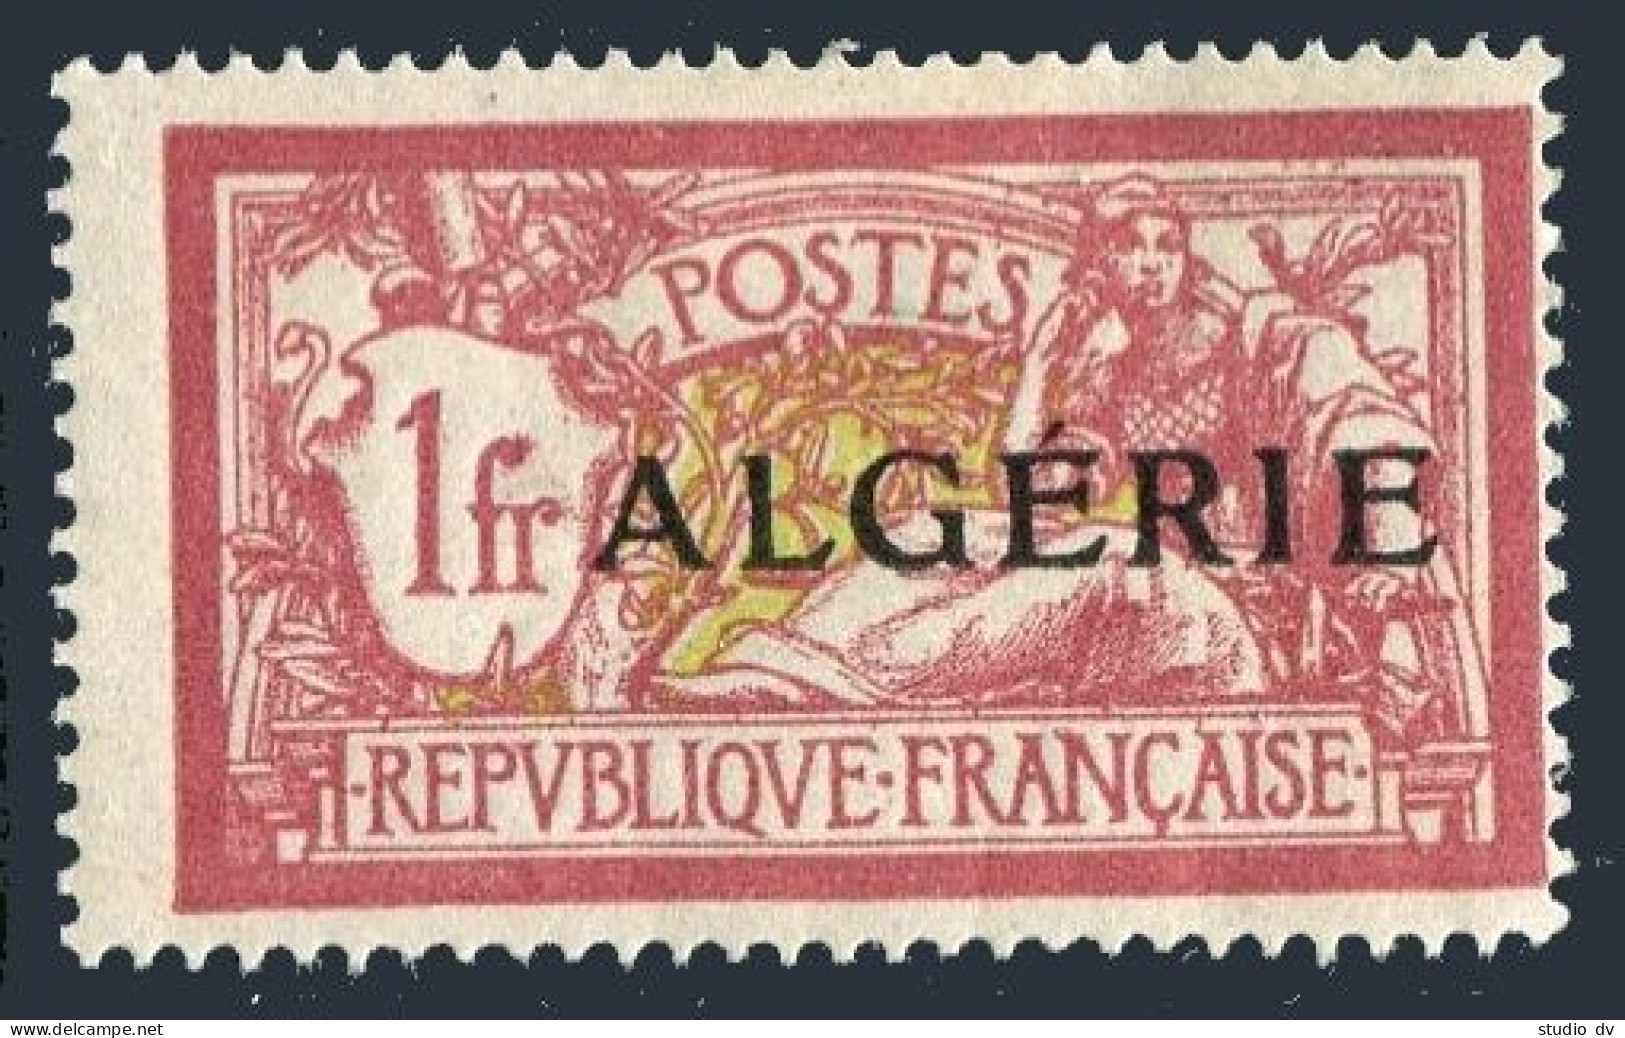 Algeria 28, Hinged. Michel . Liberty & Peace, 1924. - Algerije (1962-...)